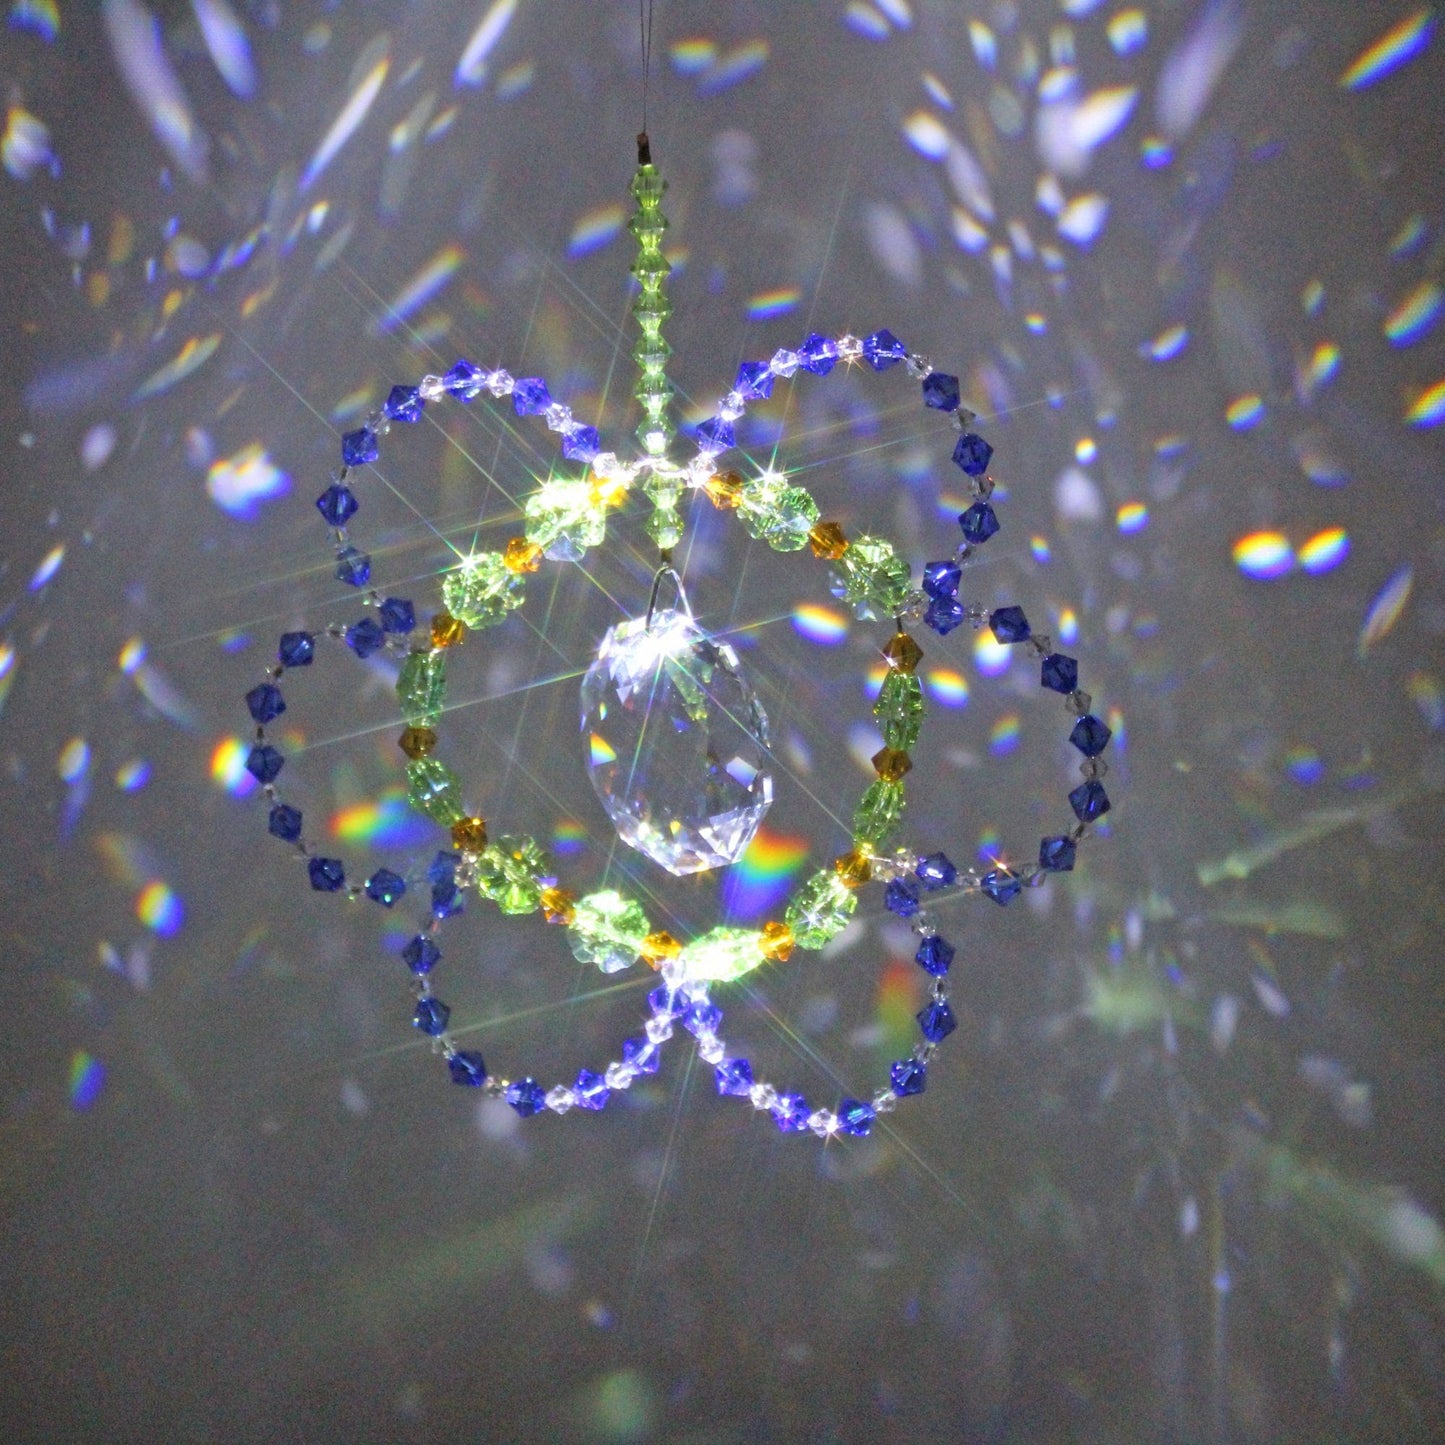 Swarovski Crystals Prism Mobile Window Suncatcher Rainbow Ornaments Sun Catcher Blue Flower